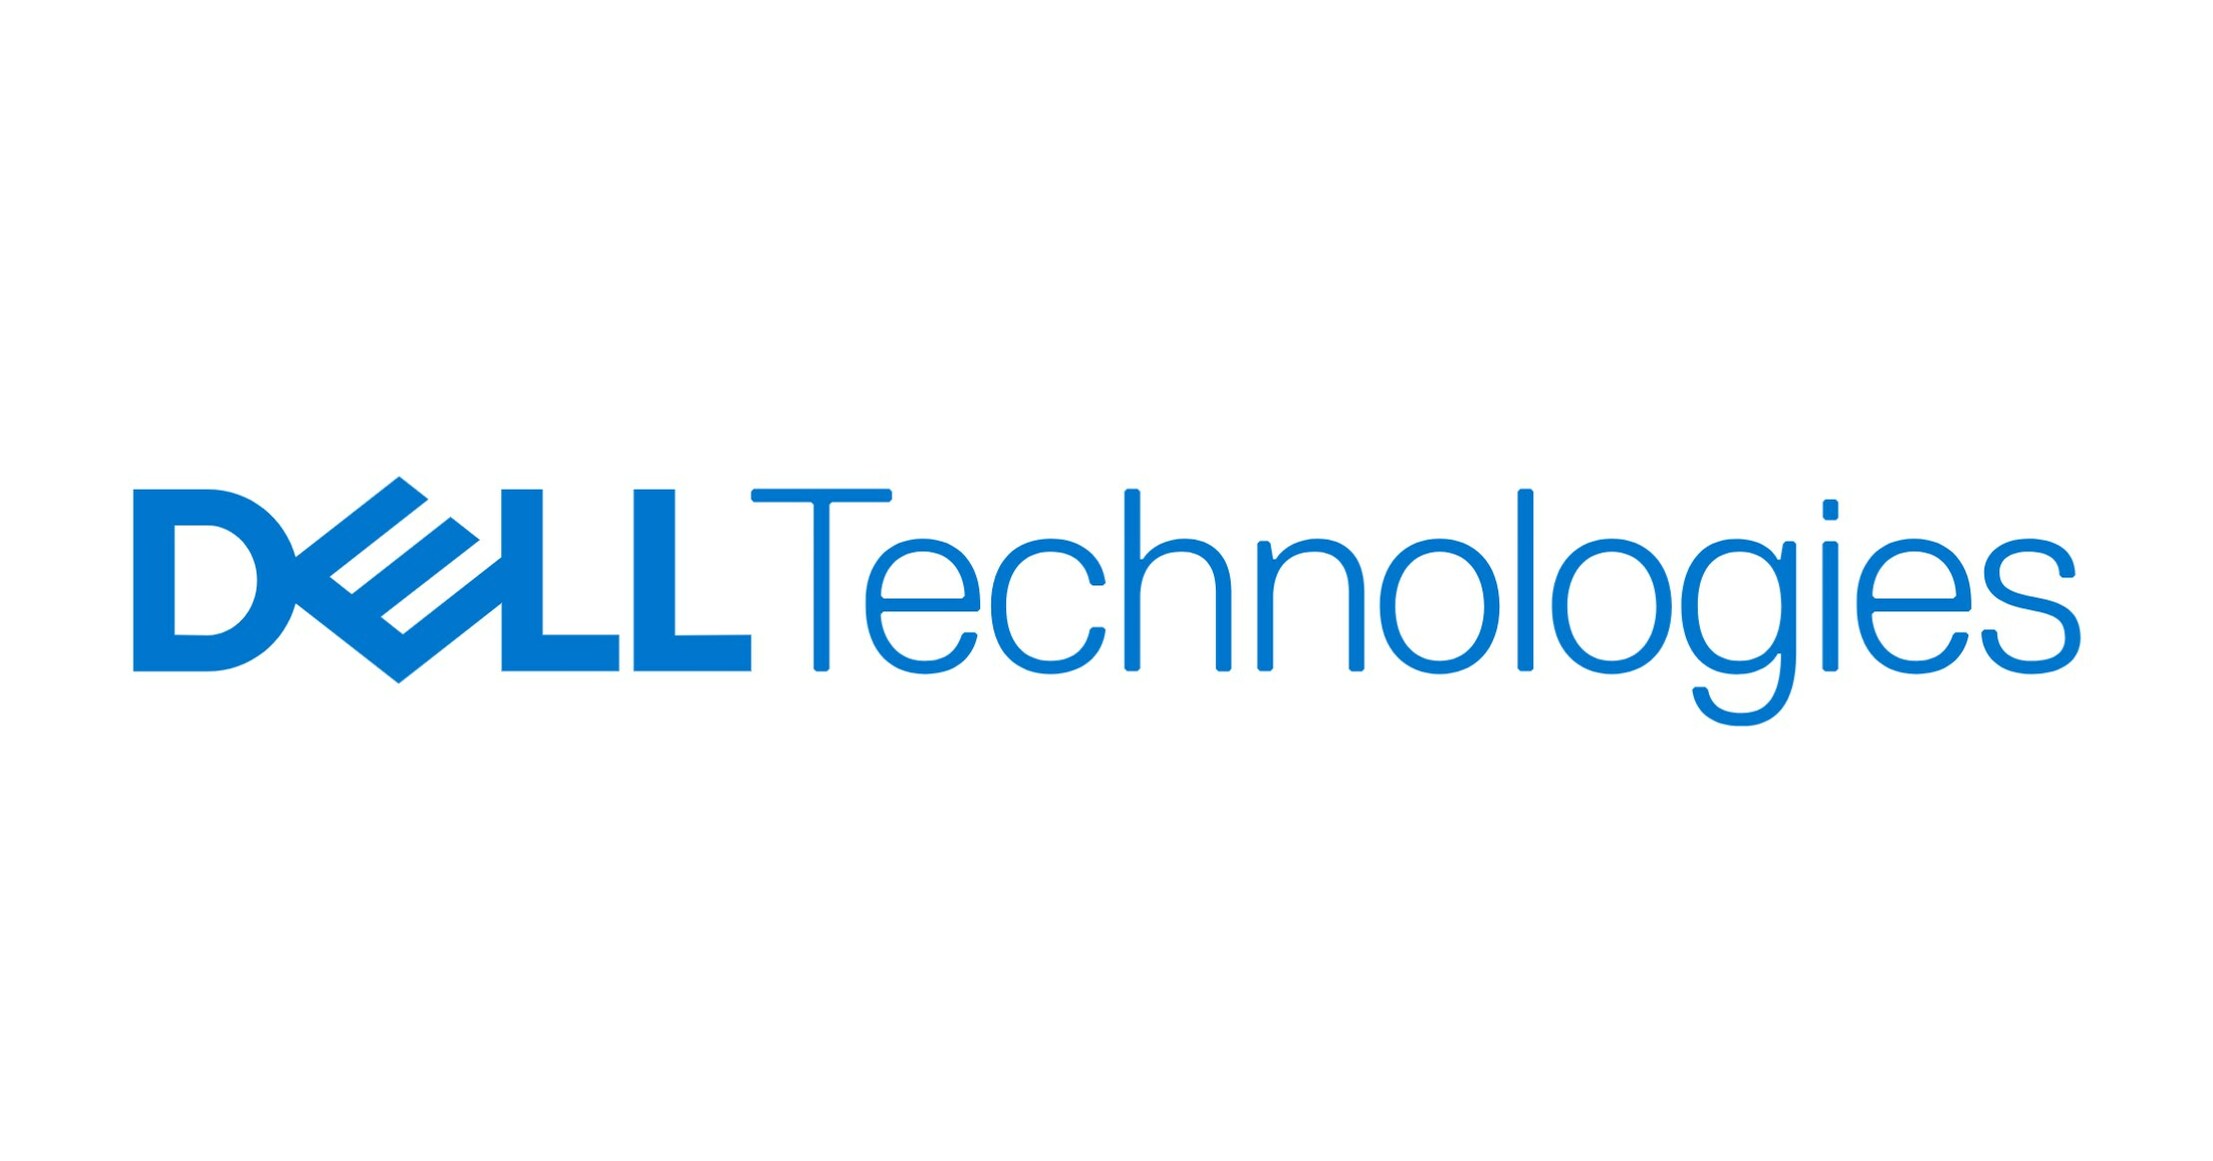 Dell Technologies Appoints Steve Mollenkopf to its Board of Directors